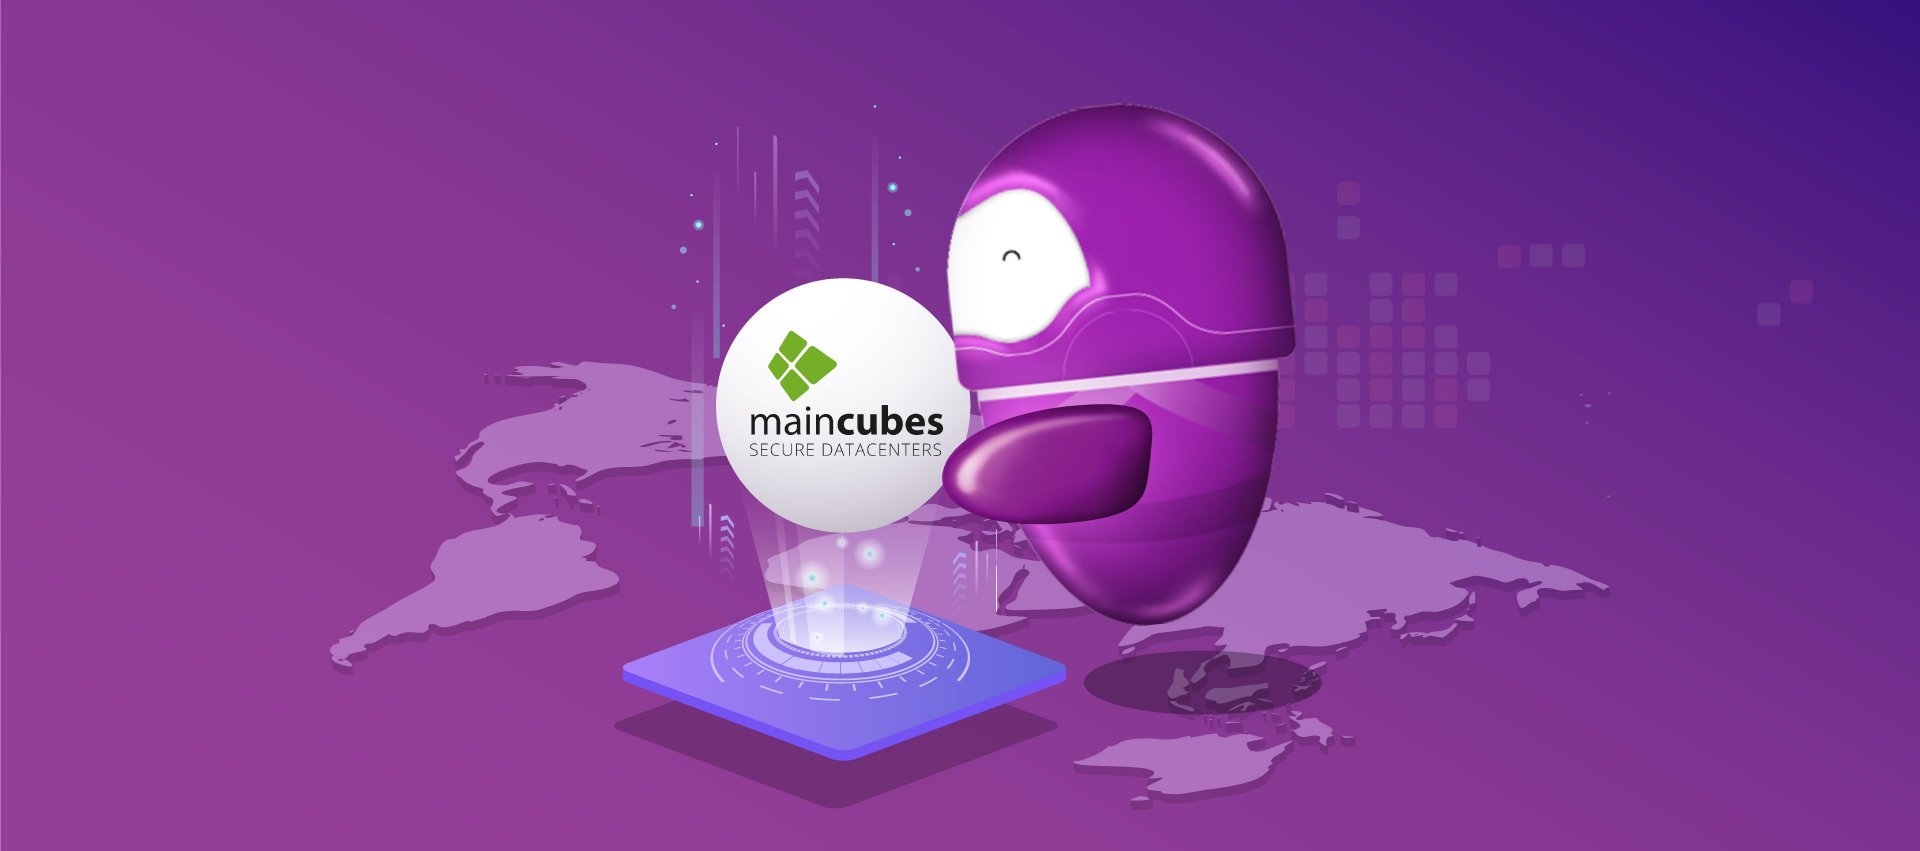 maincubes Enters Strategic Partnership with Epsilon to Service Growing Digital Needs of its Customers